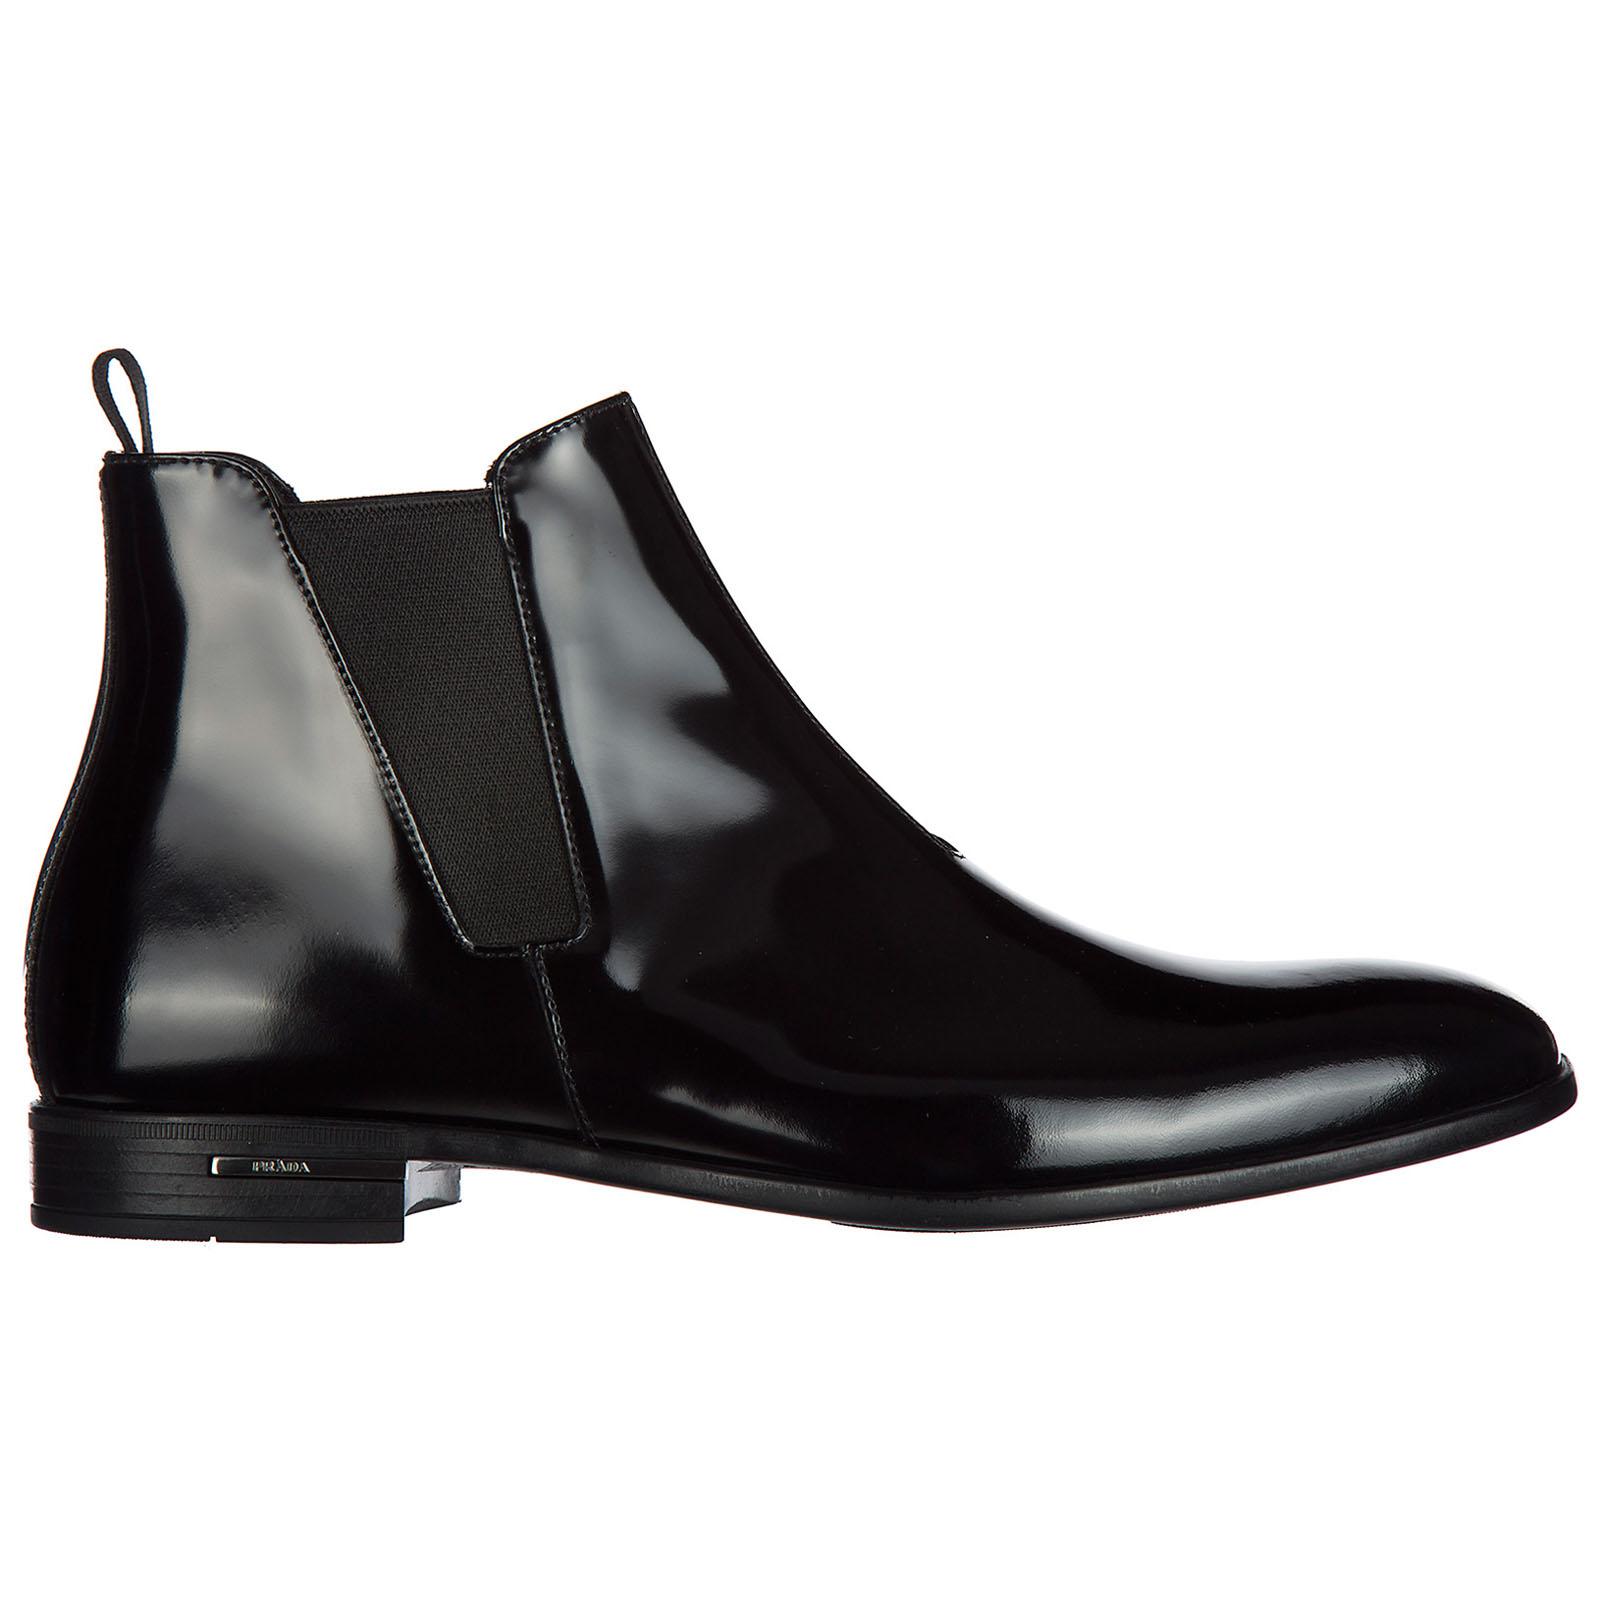 Prada Genuine Leather Ankle Boots Spazzolato Fume in Black for Men - Lyst